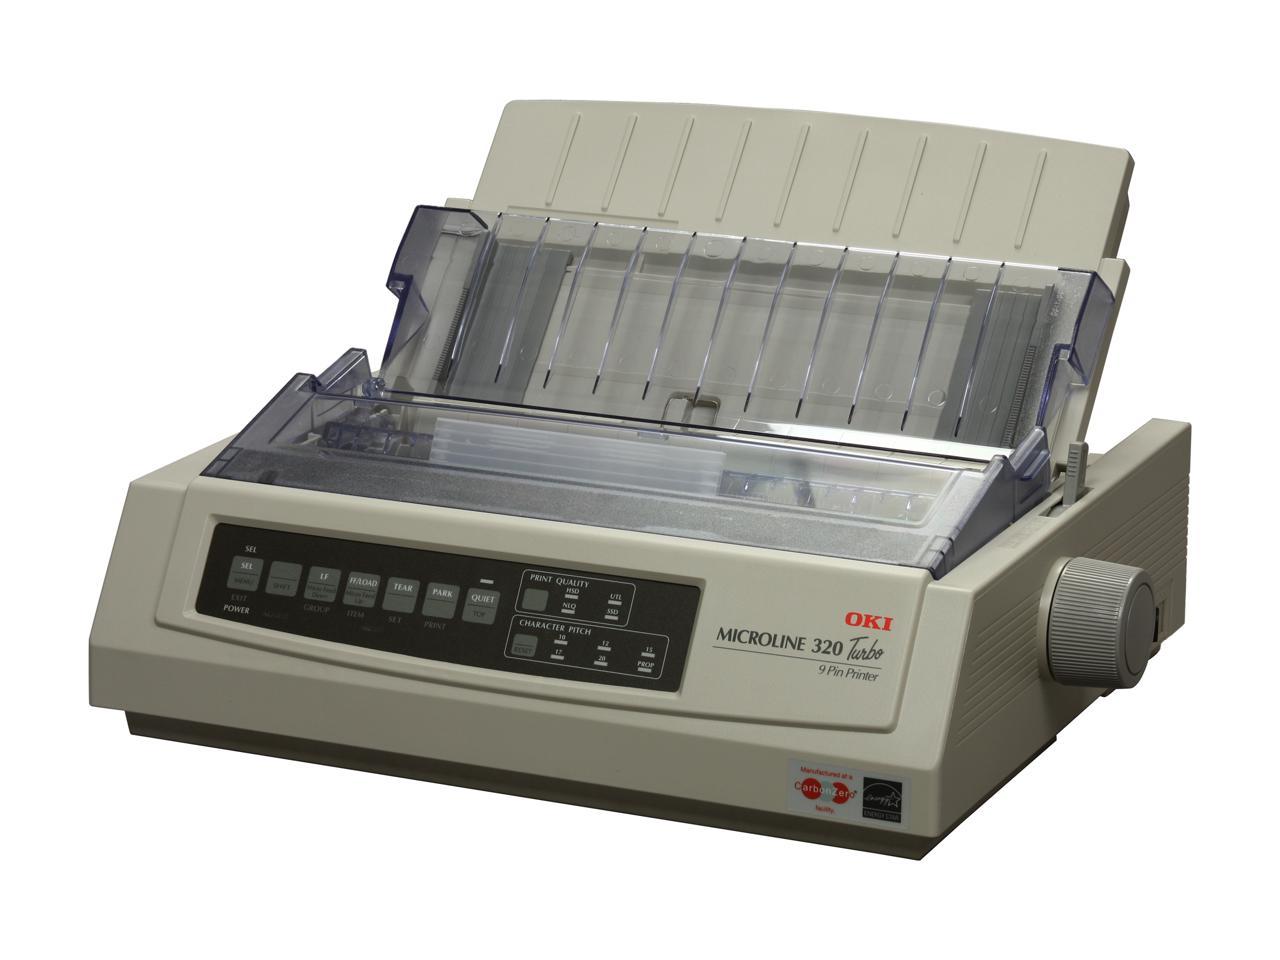 okidata microline 320 turbo printer needs to speed up